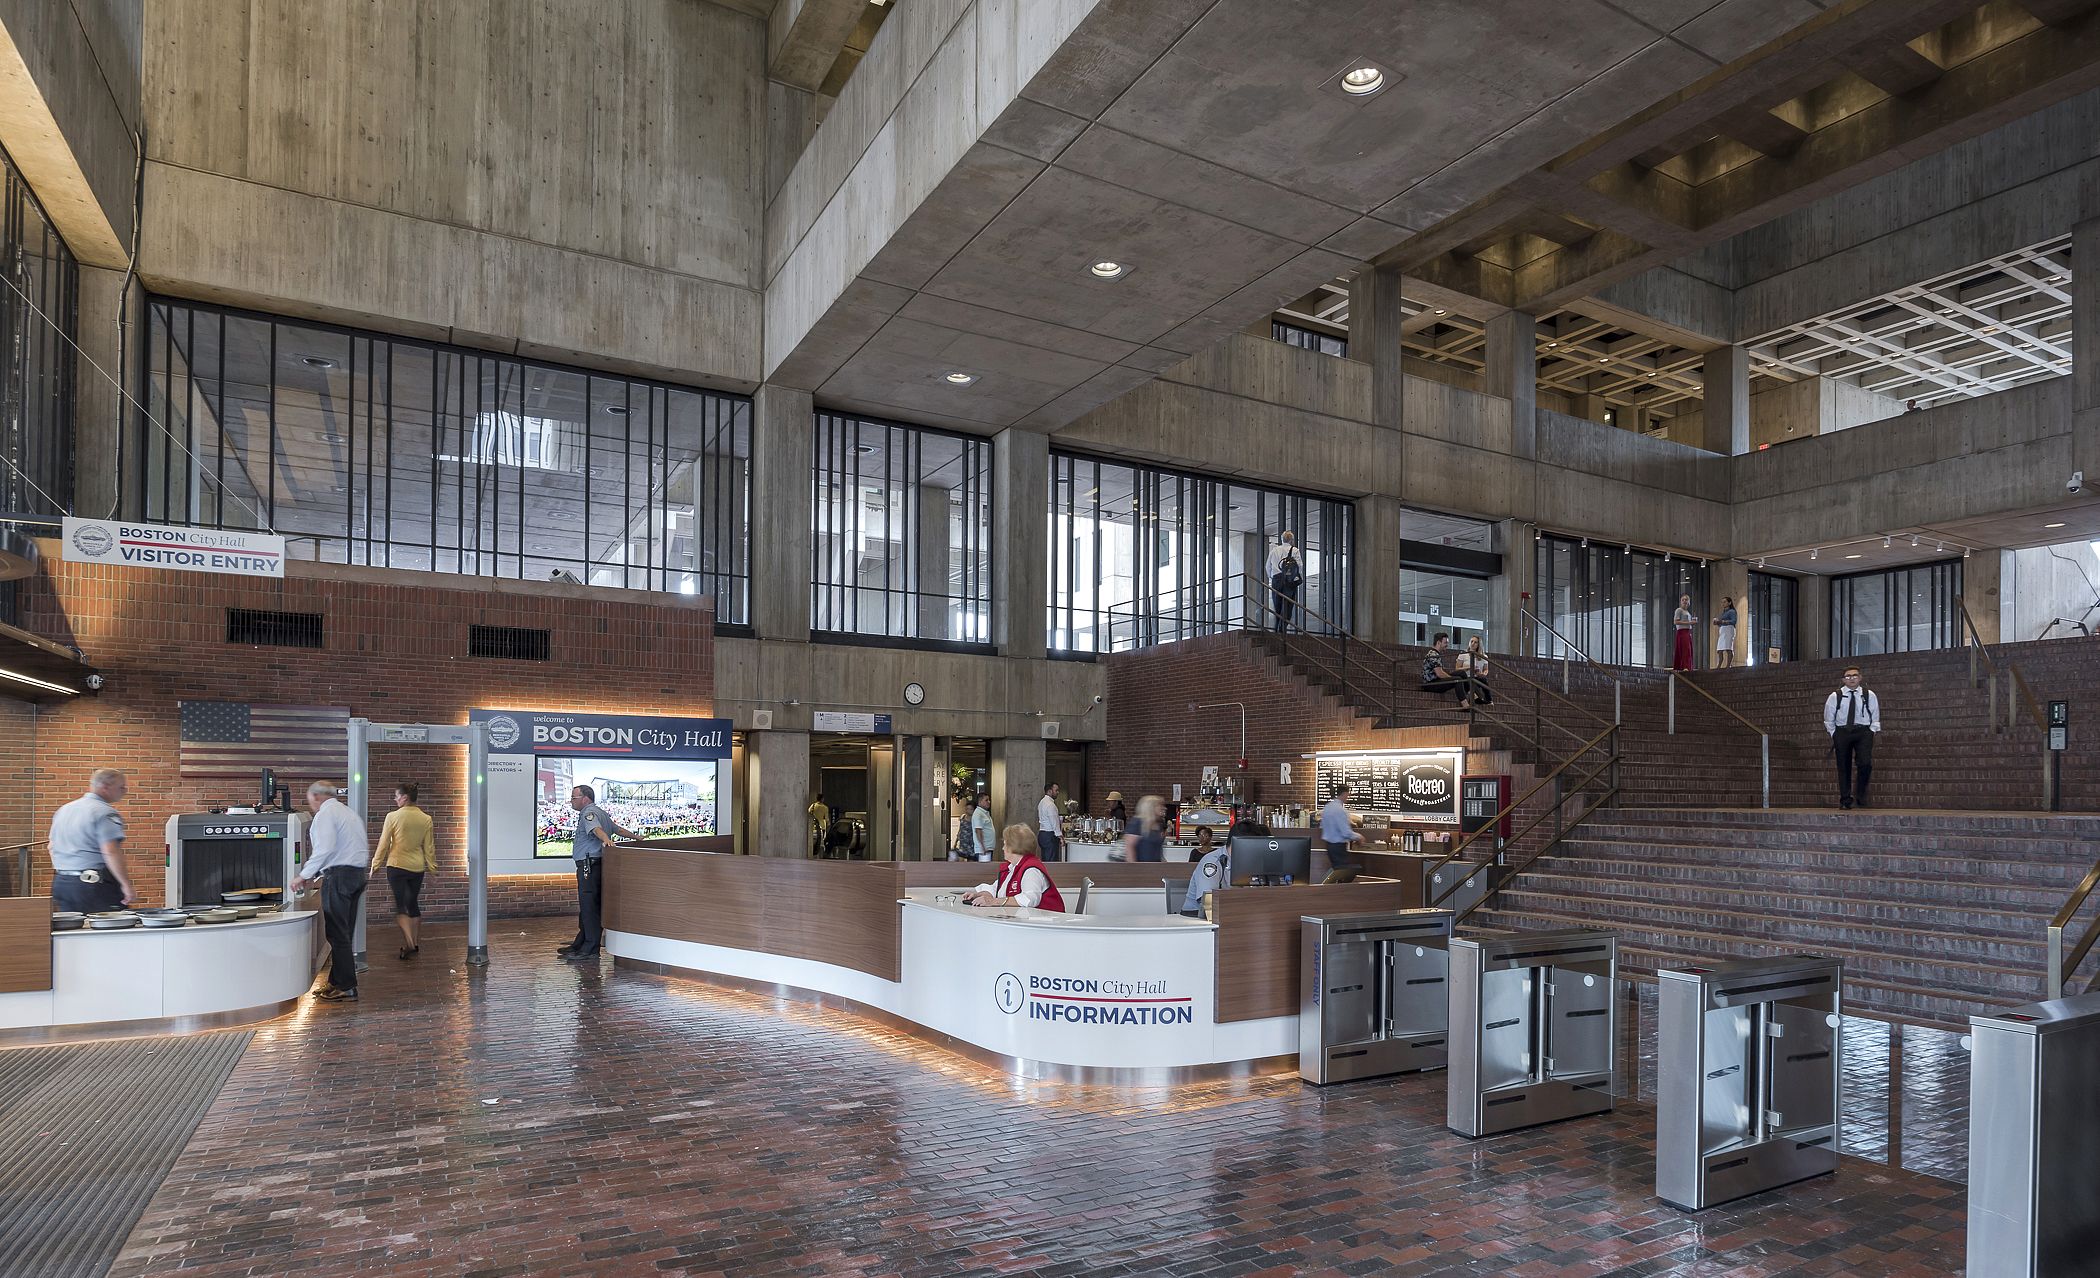 Utile completes renovation of Boston City Hall Lobby